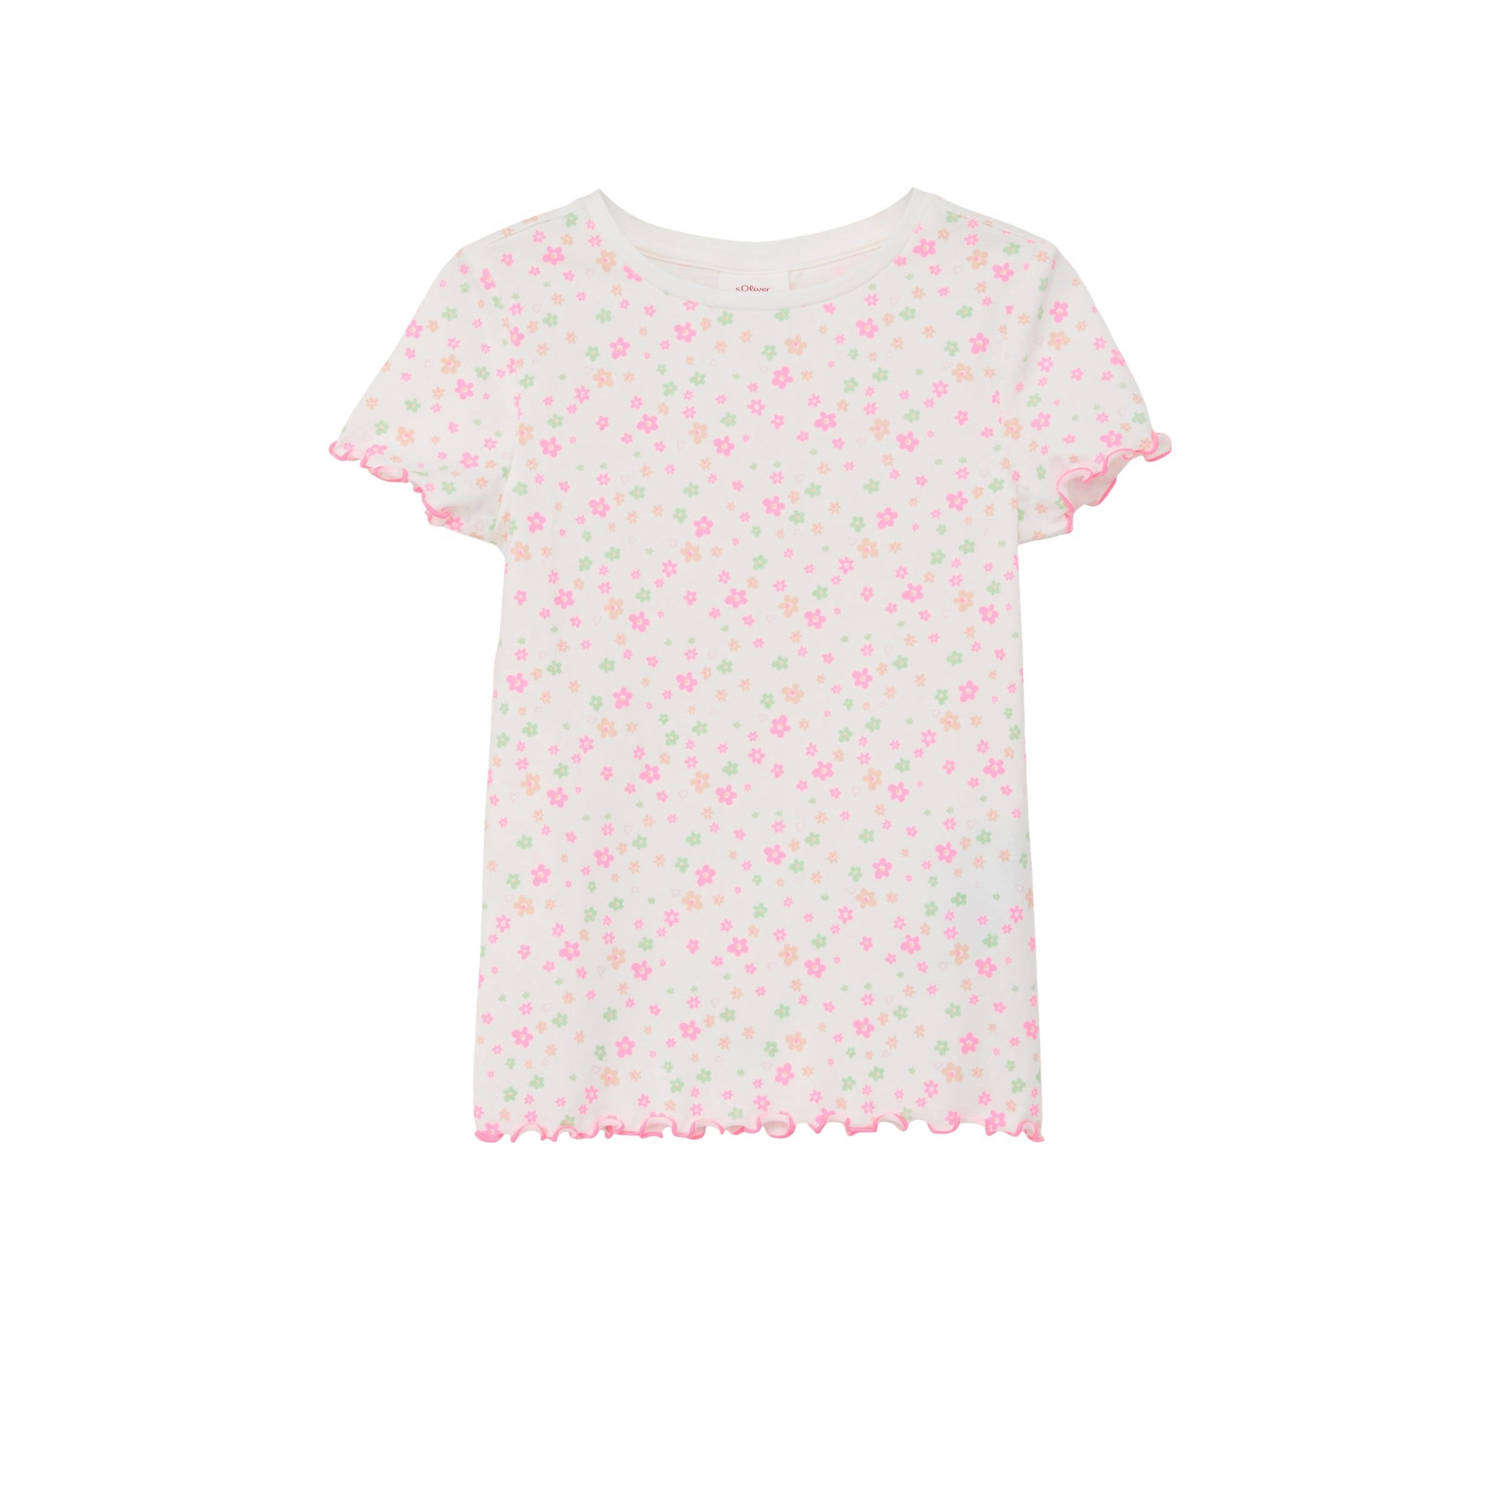 s.Oliver gebloemd T-shirt wit roze